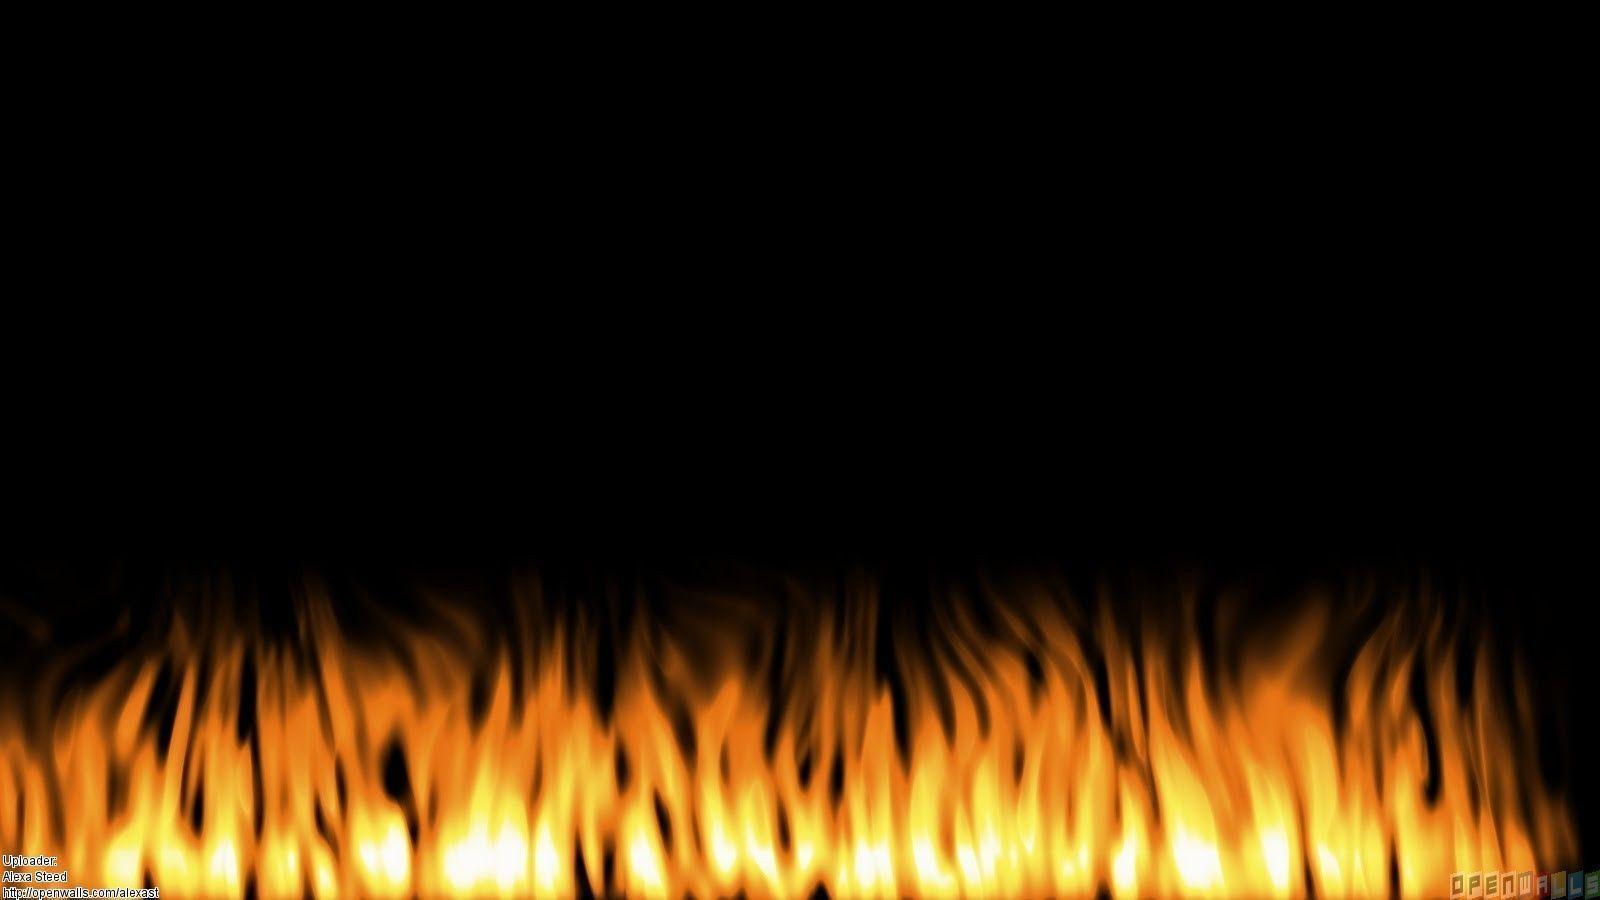 Flame Image Flames Wallpaper